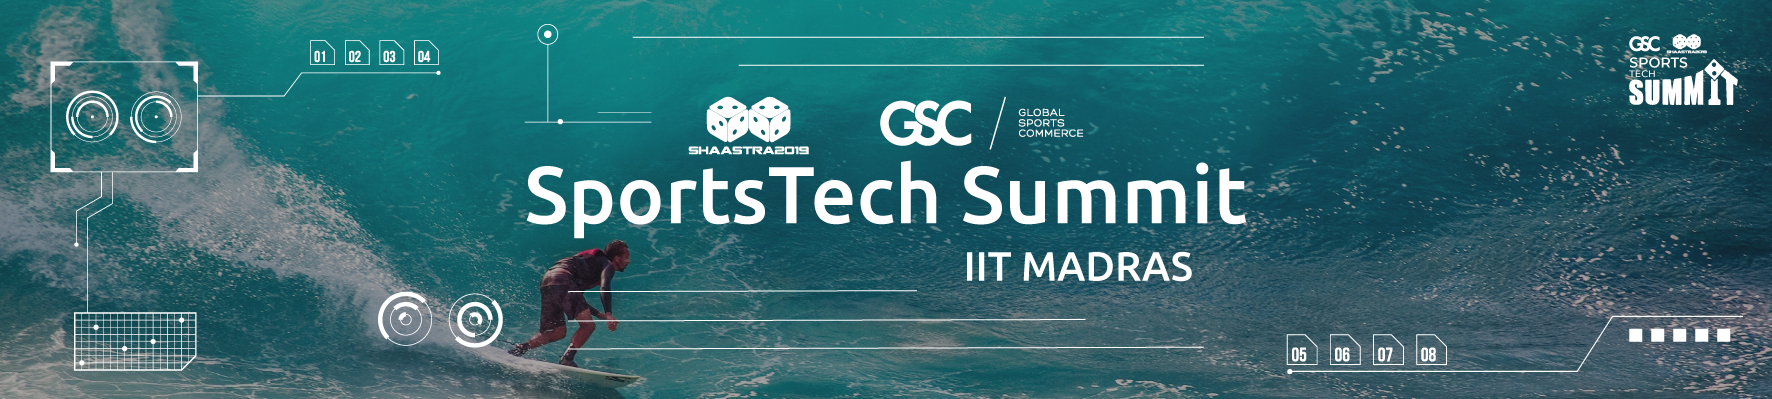 SportsTech Summit 2019, Chennai, Tamil Nadu, India